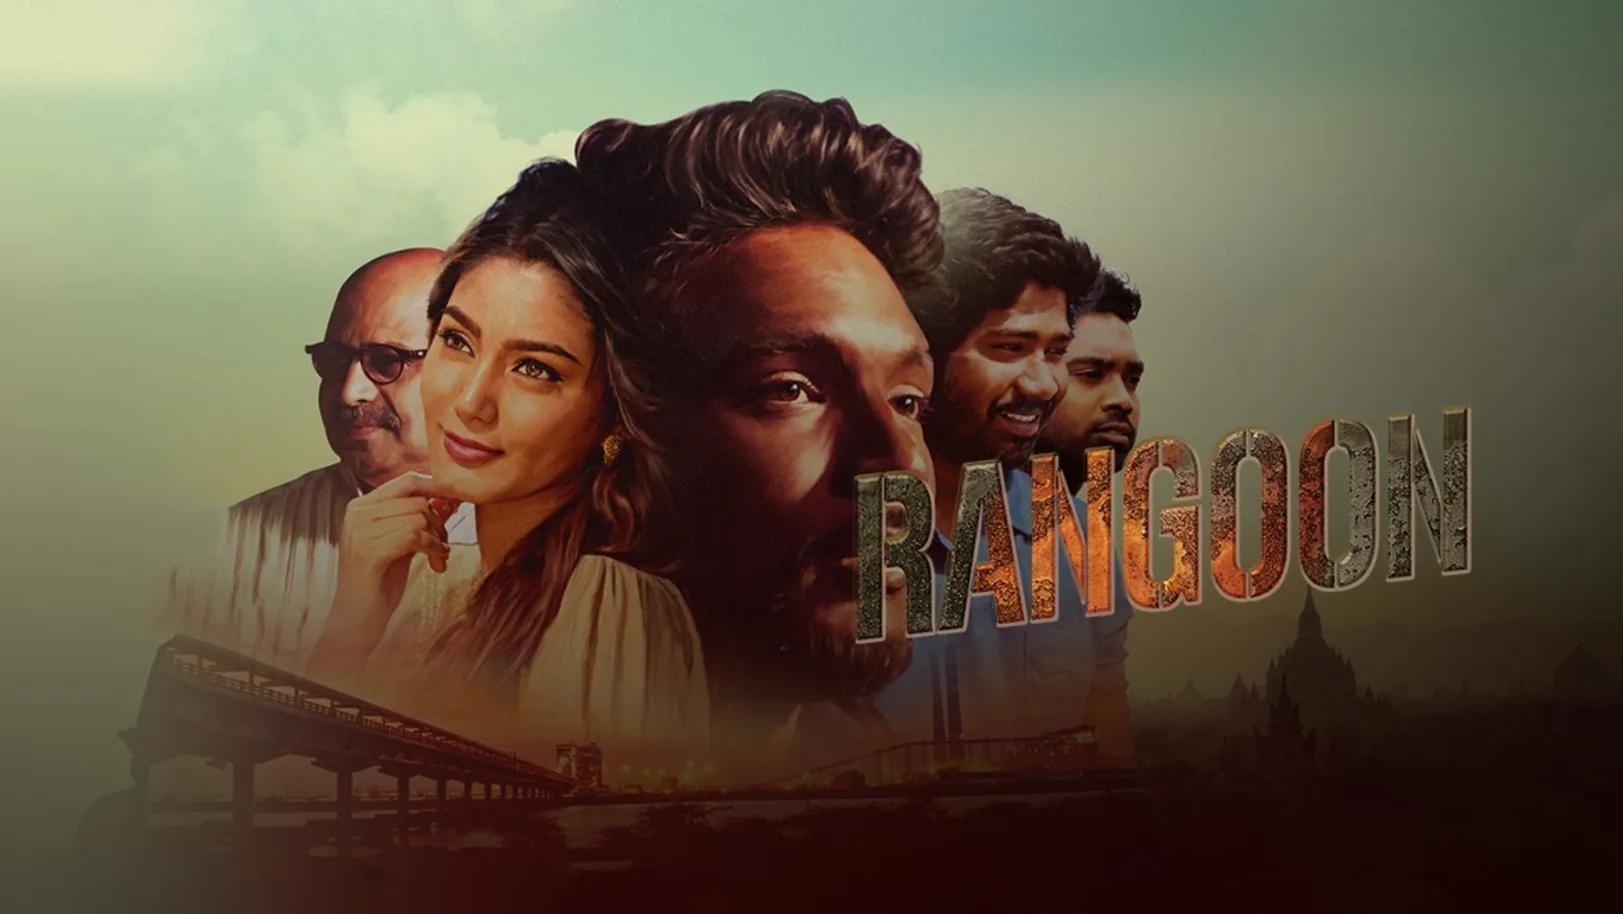 Rangoon Movie